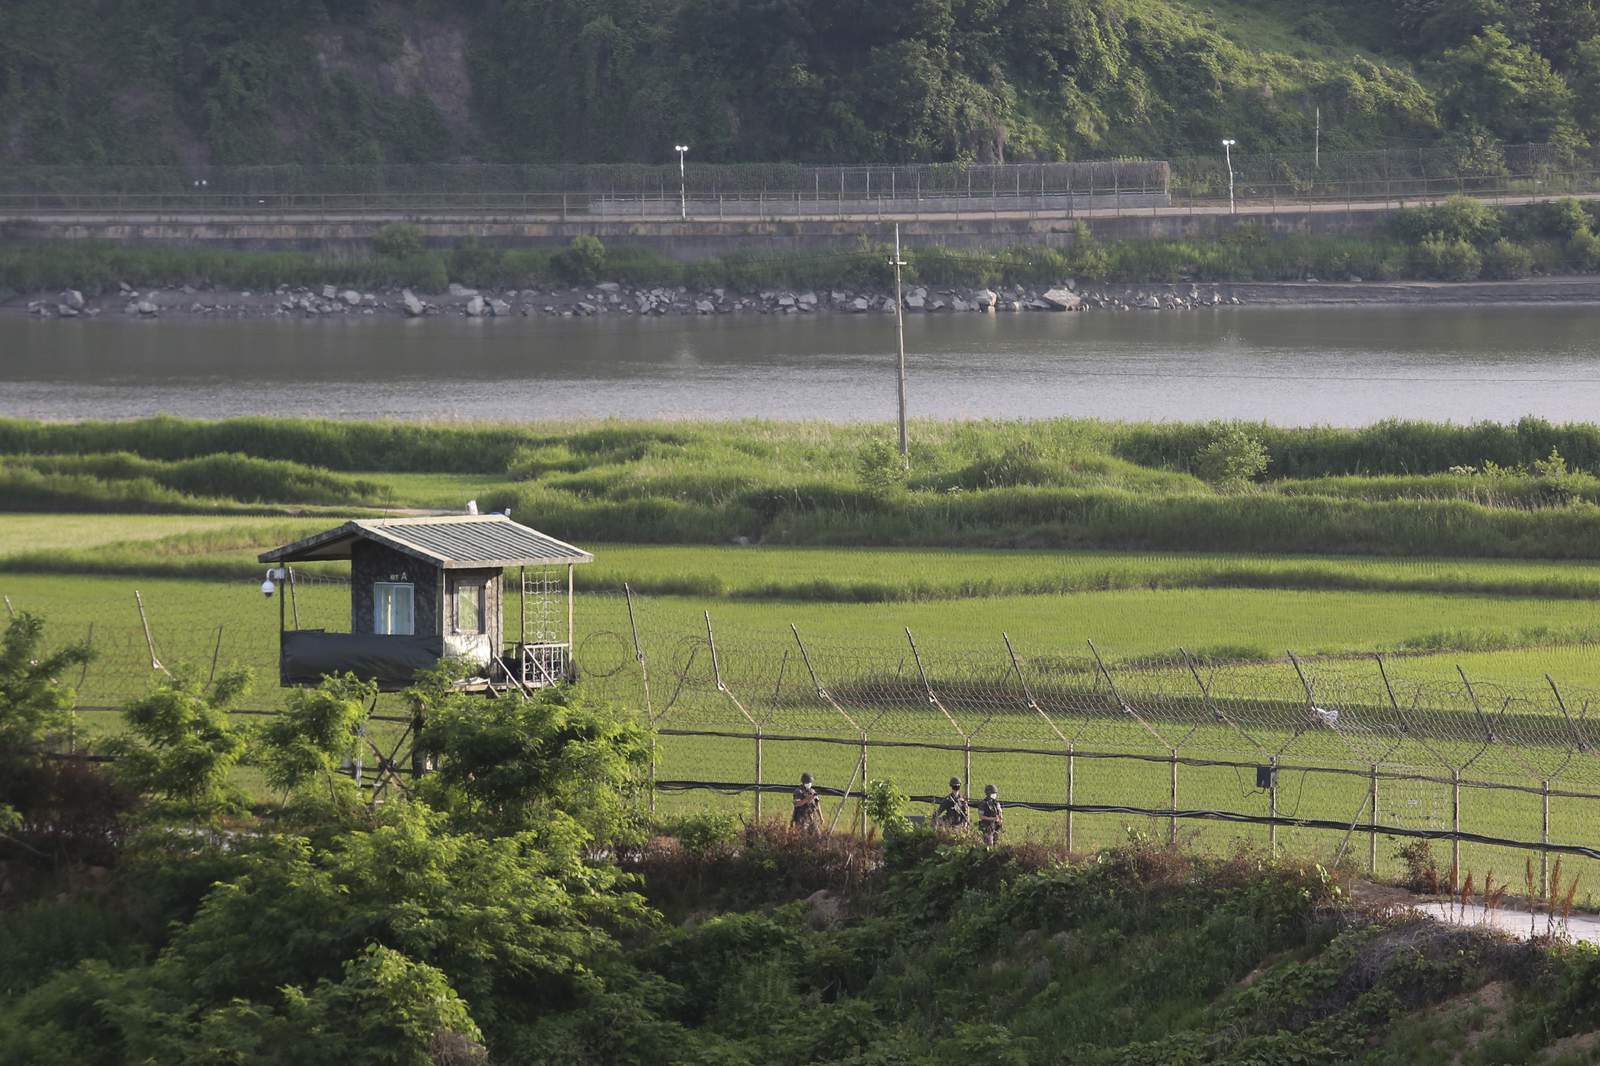 NKorea's military threatens to reenter demilitarized areas